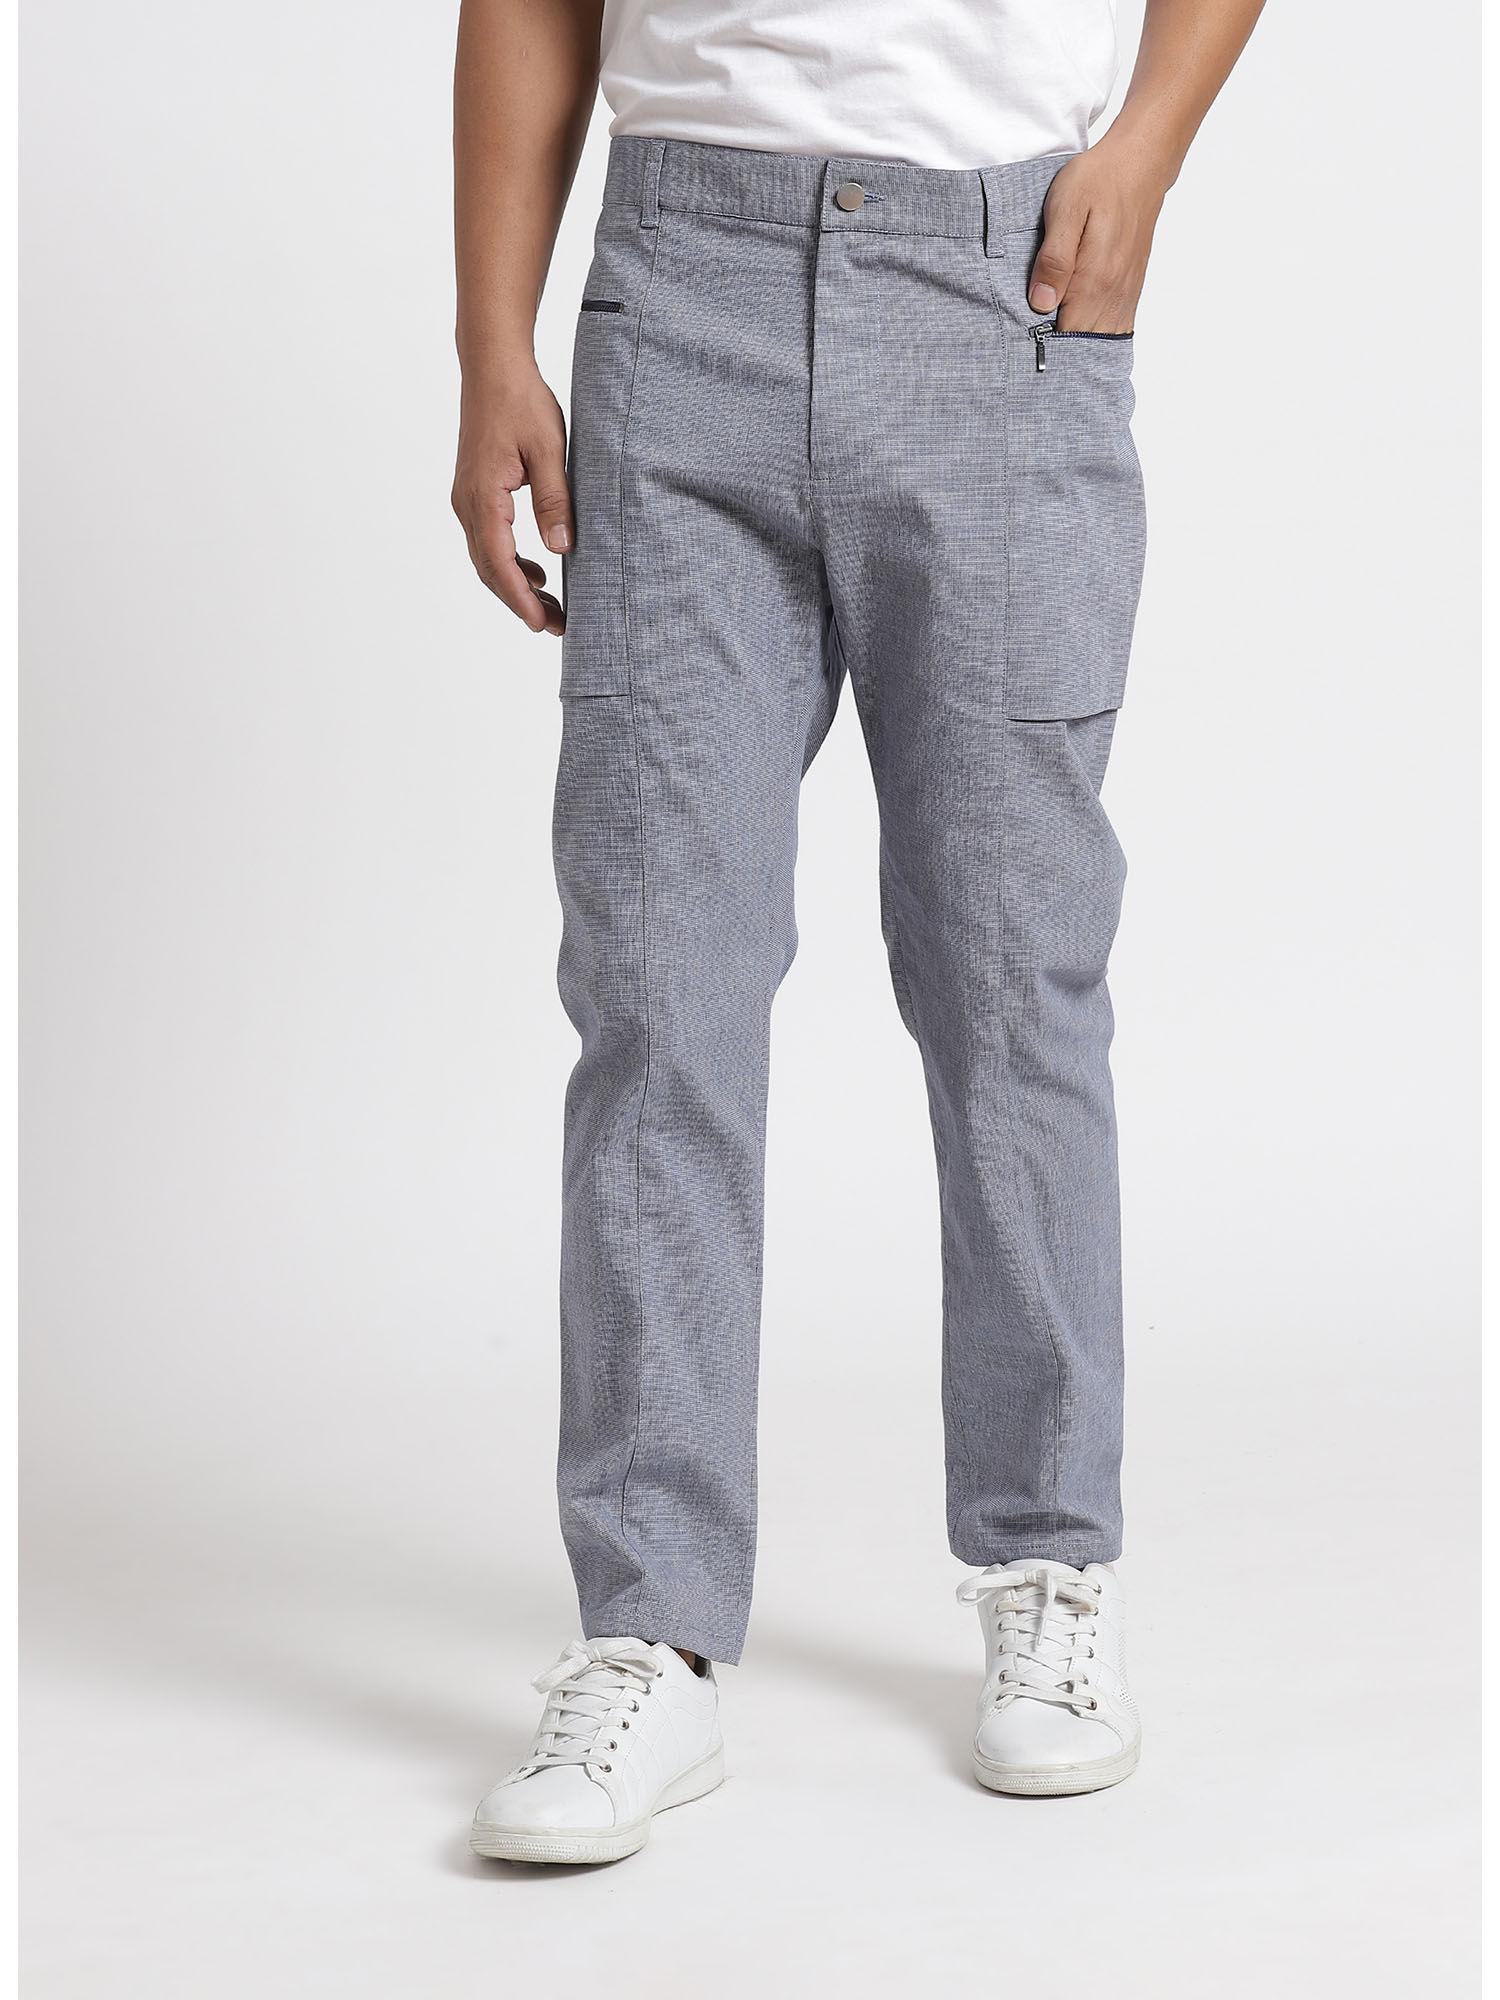 mycel grey trouser